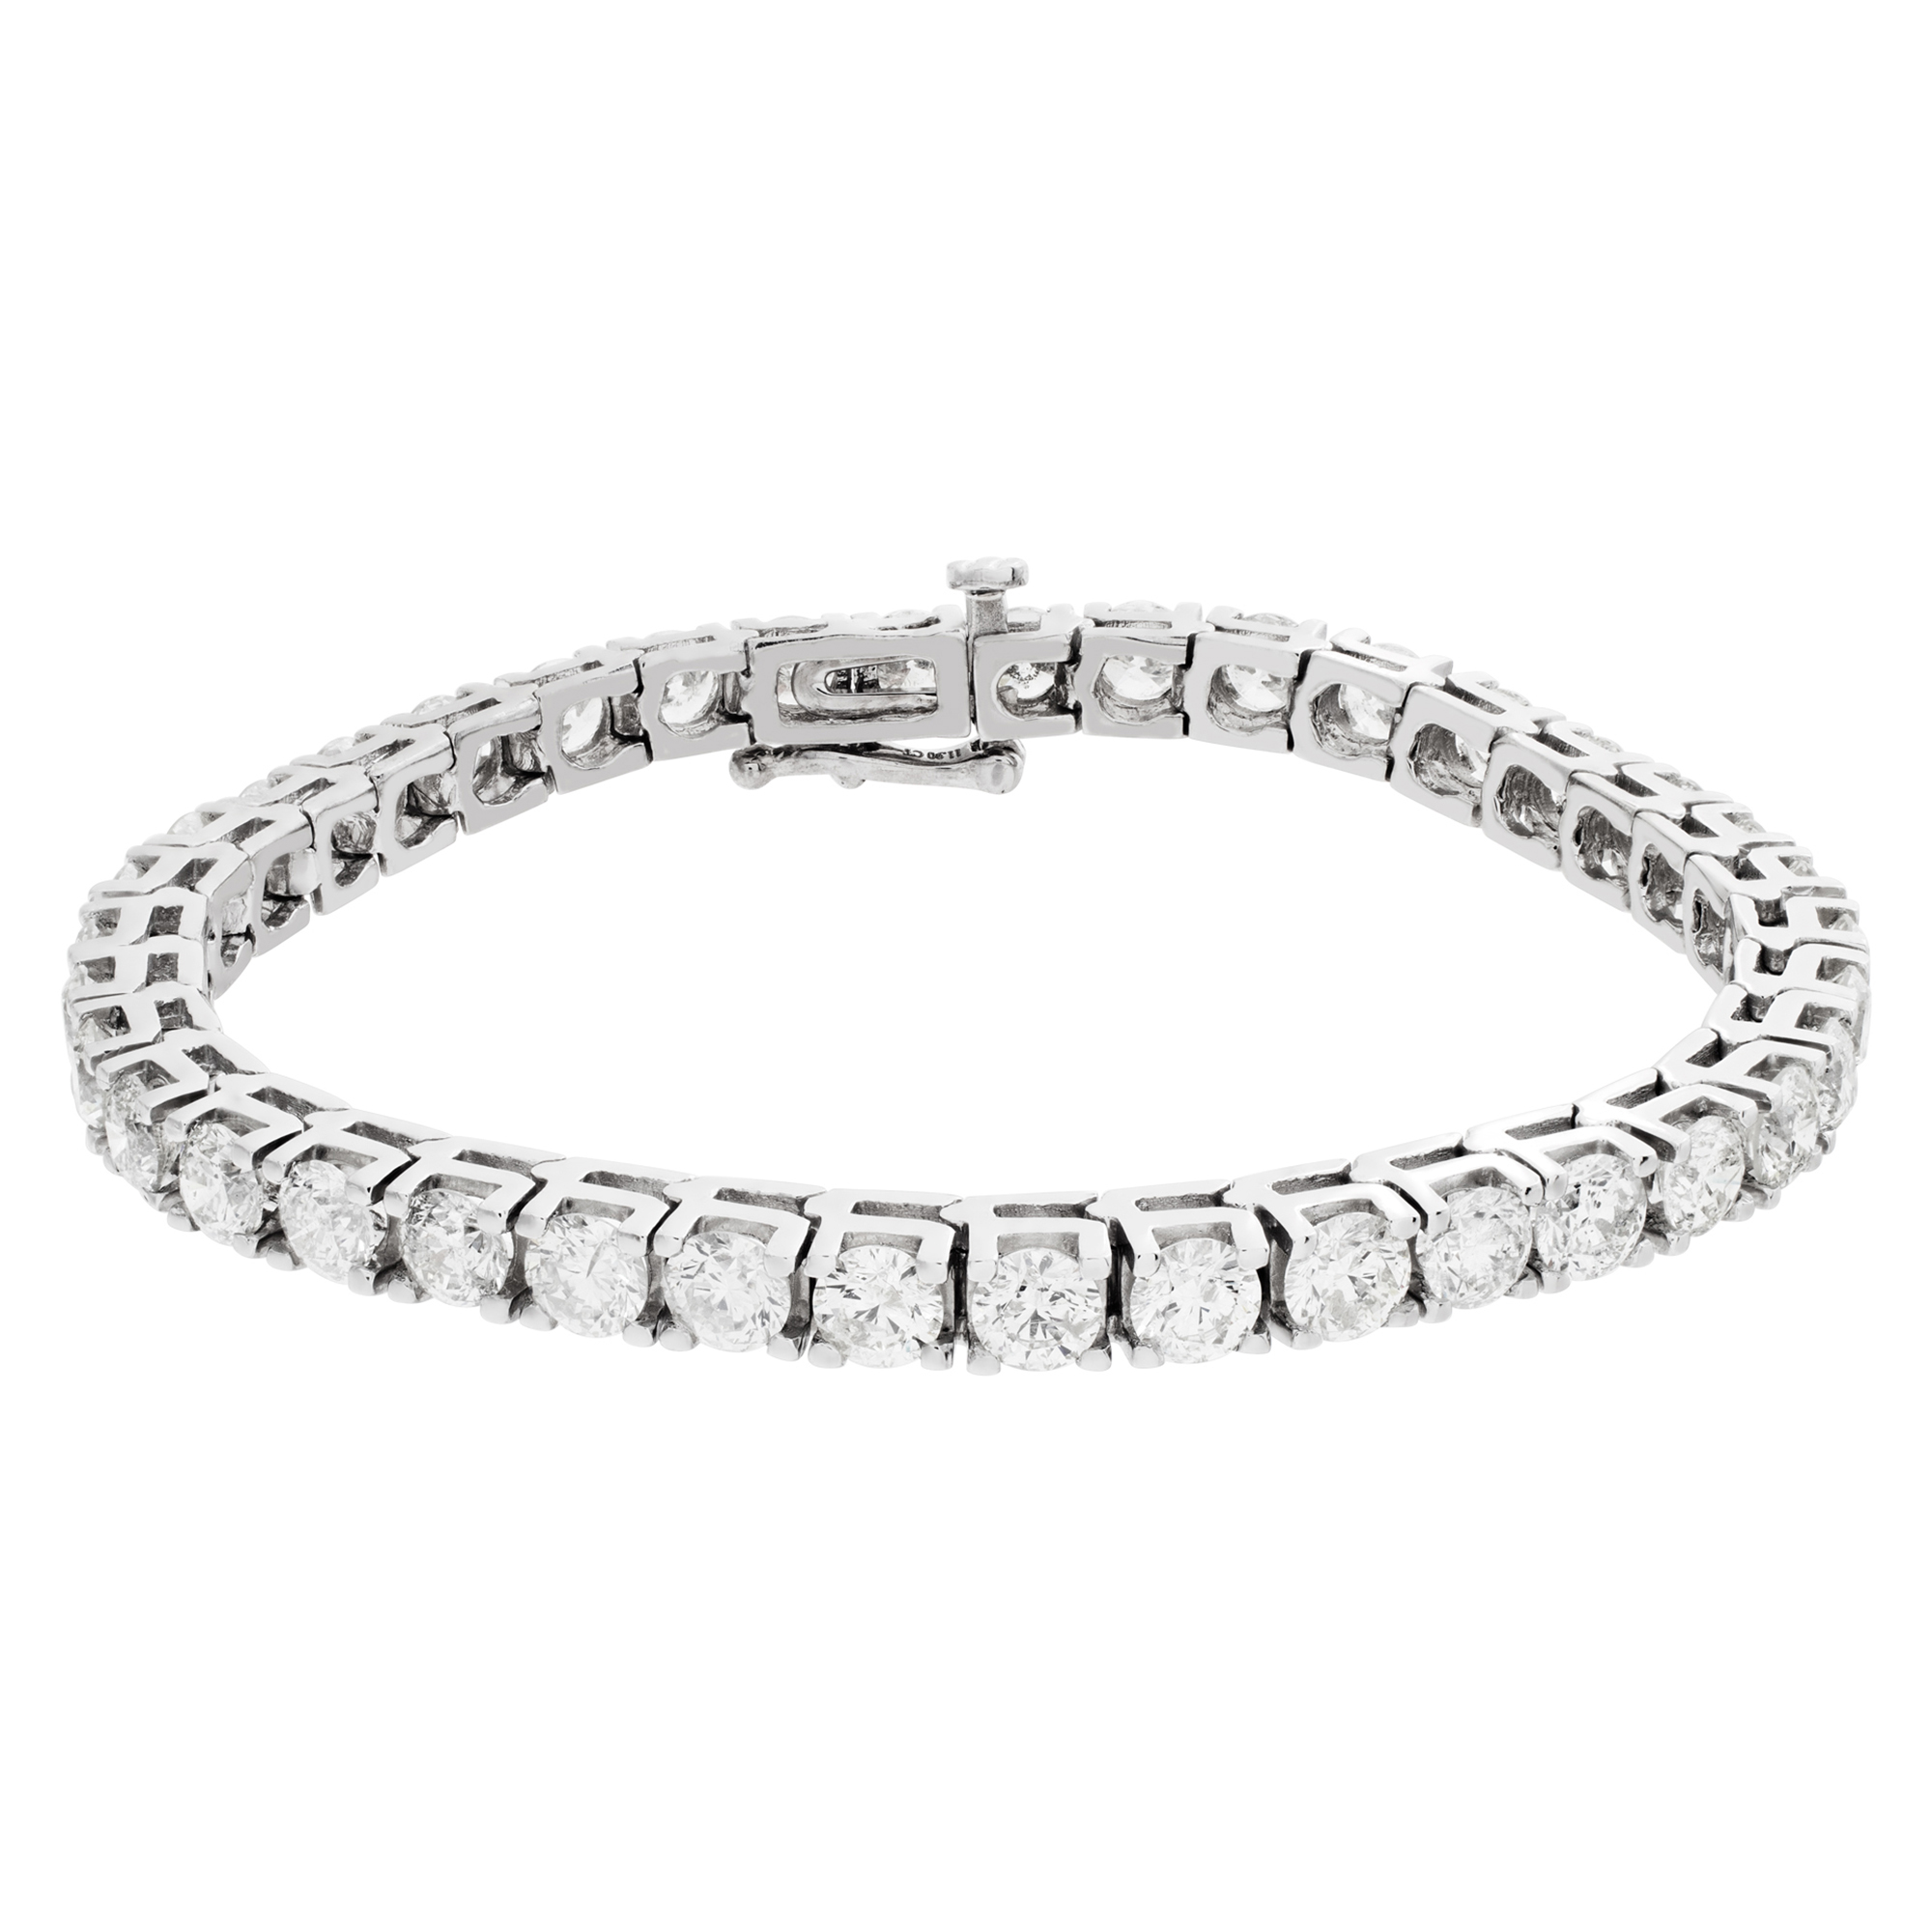 Line diamonds & platinum bracelet with 11.90 carats full cut round brilliant diamonds.